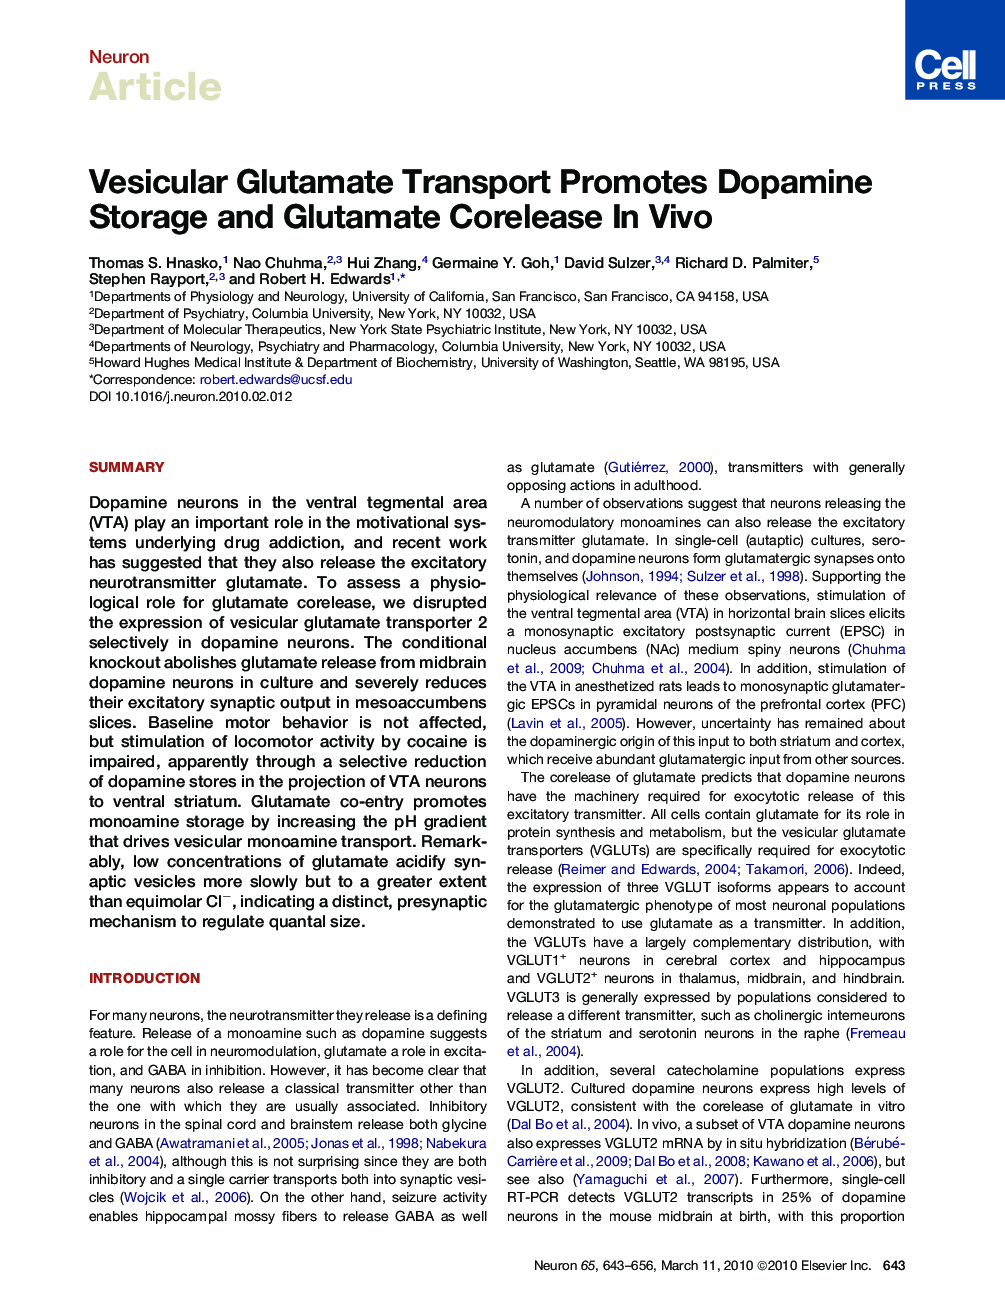 Vesicular Glutamate Transport Promotes Dopamine Storage and Glutamate Corelease In Vivo